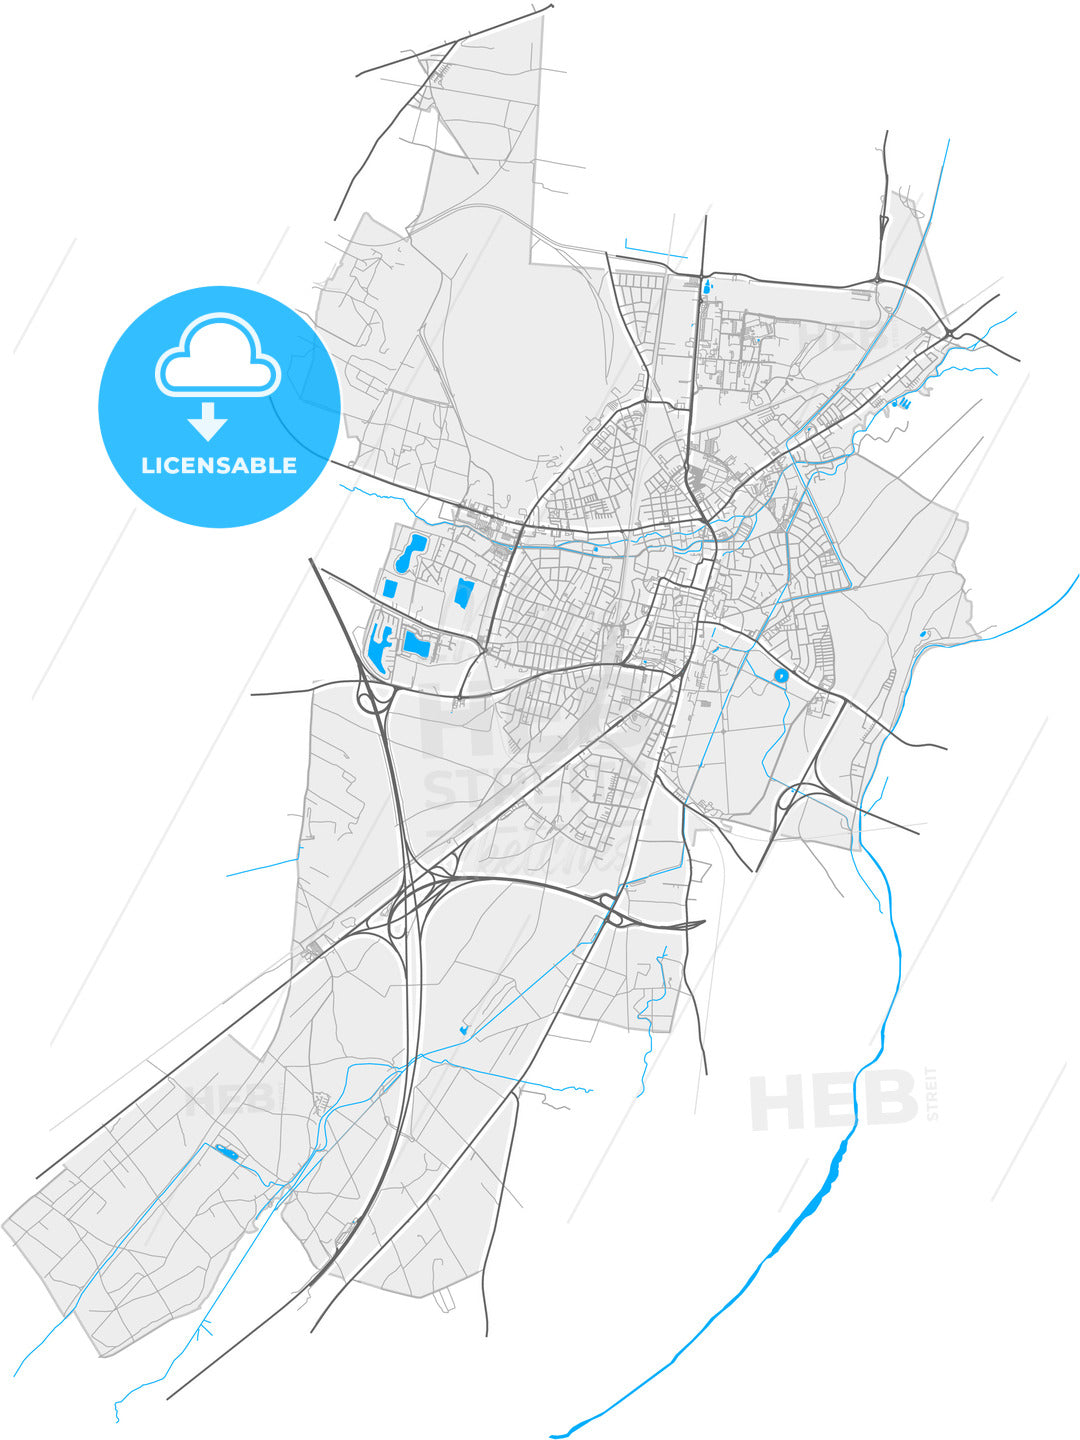 Wiener Neustadt, Lower Austria, Austria, high quality vector map